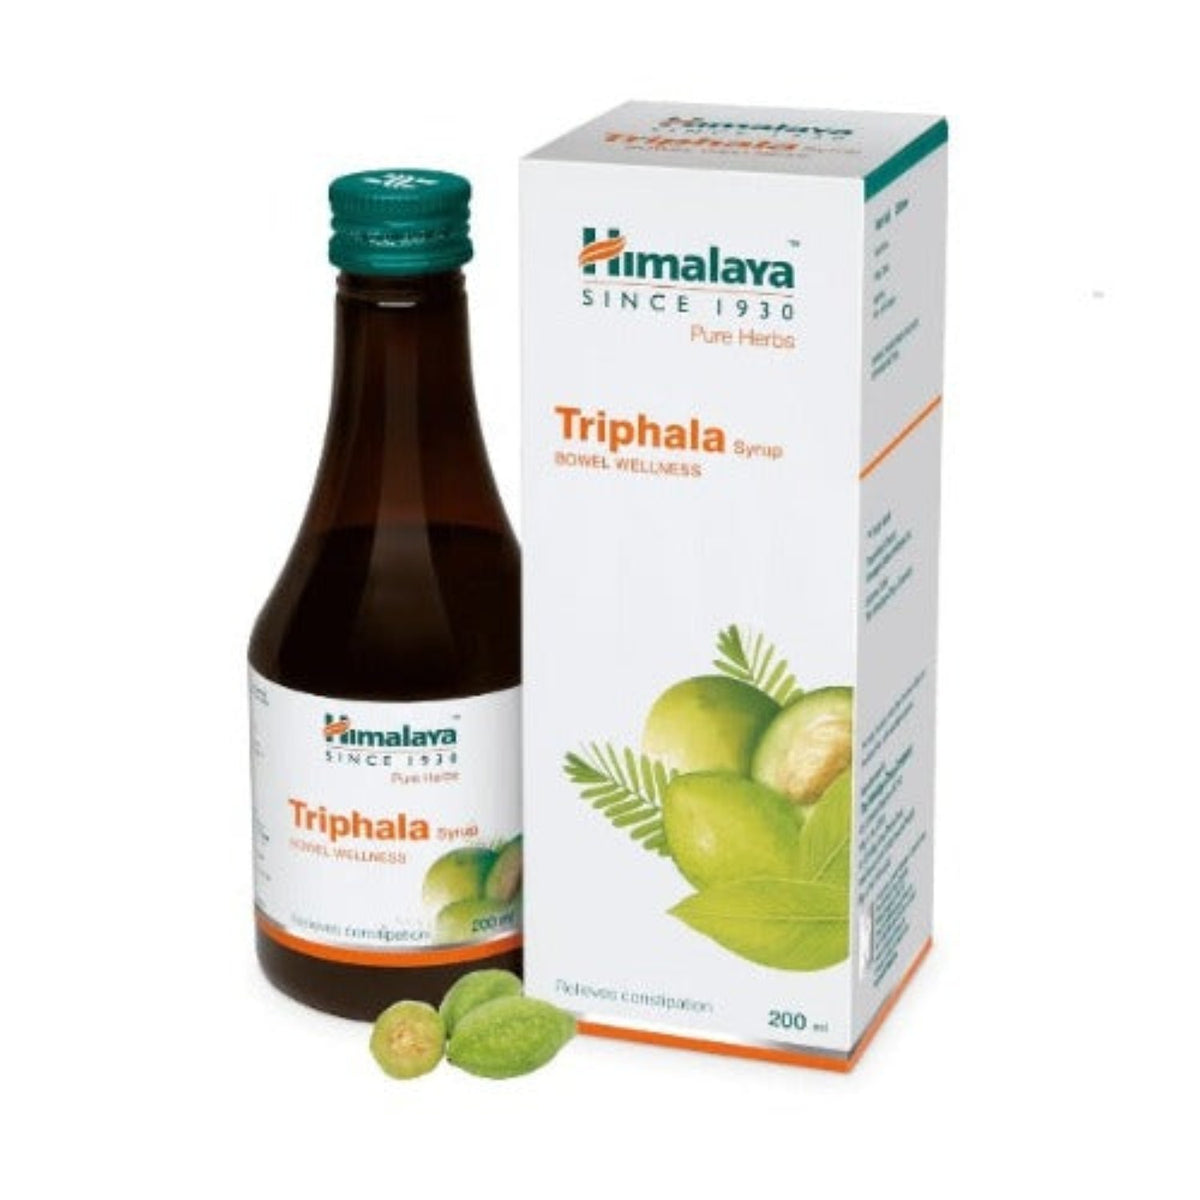 Himalaya Pure Herbs Bowel Wellness Травяной аюрведический сироп Трифала, облегчающий запоры, 200 мл